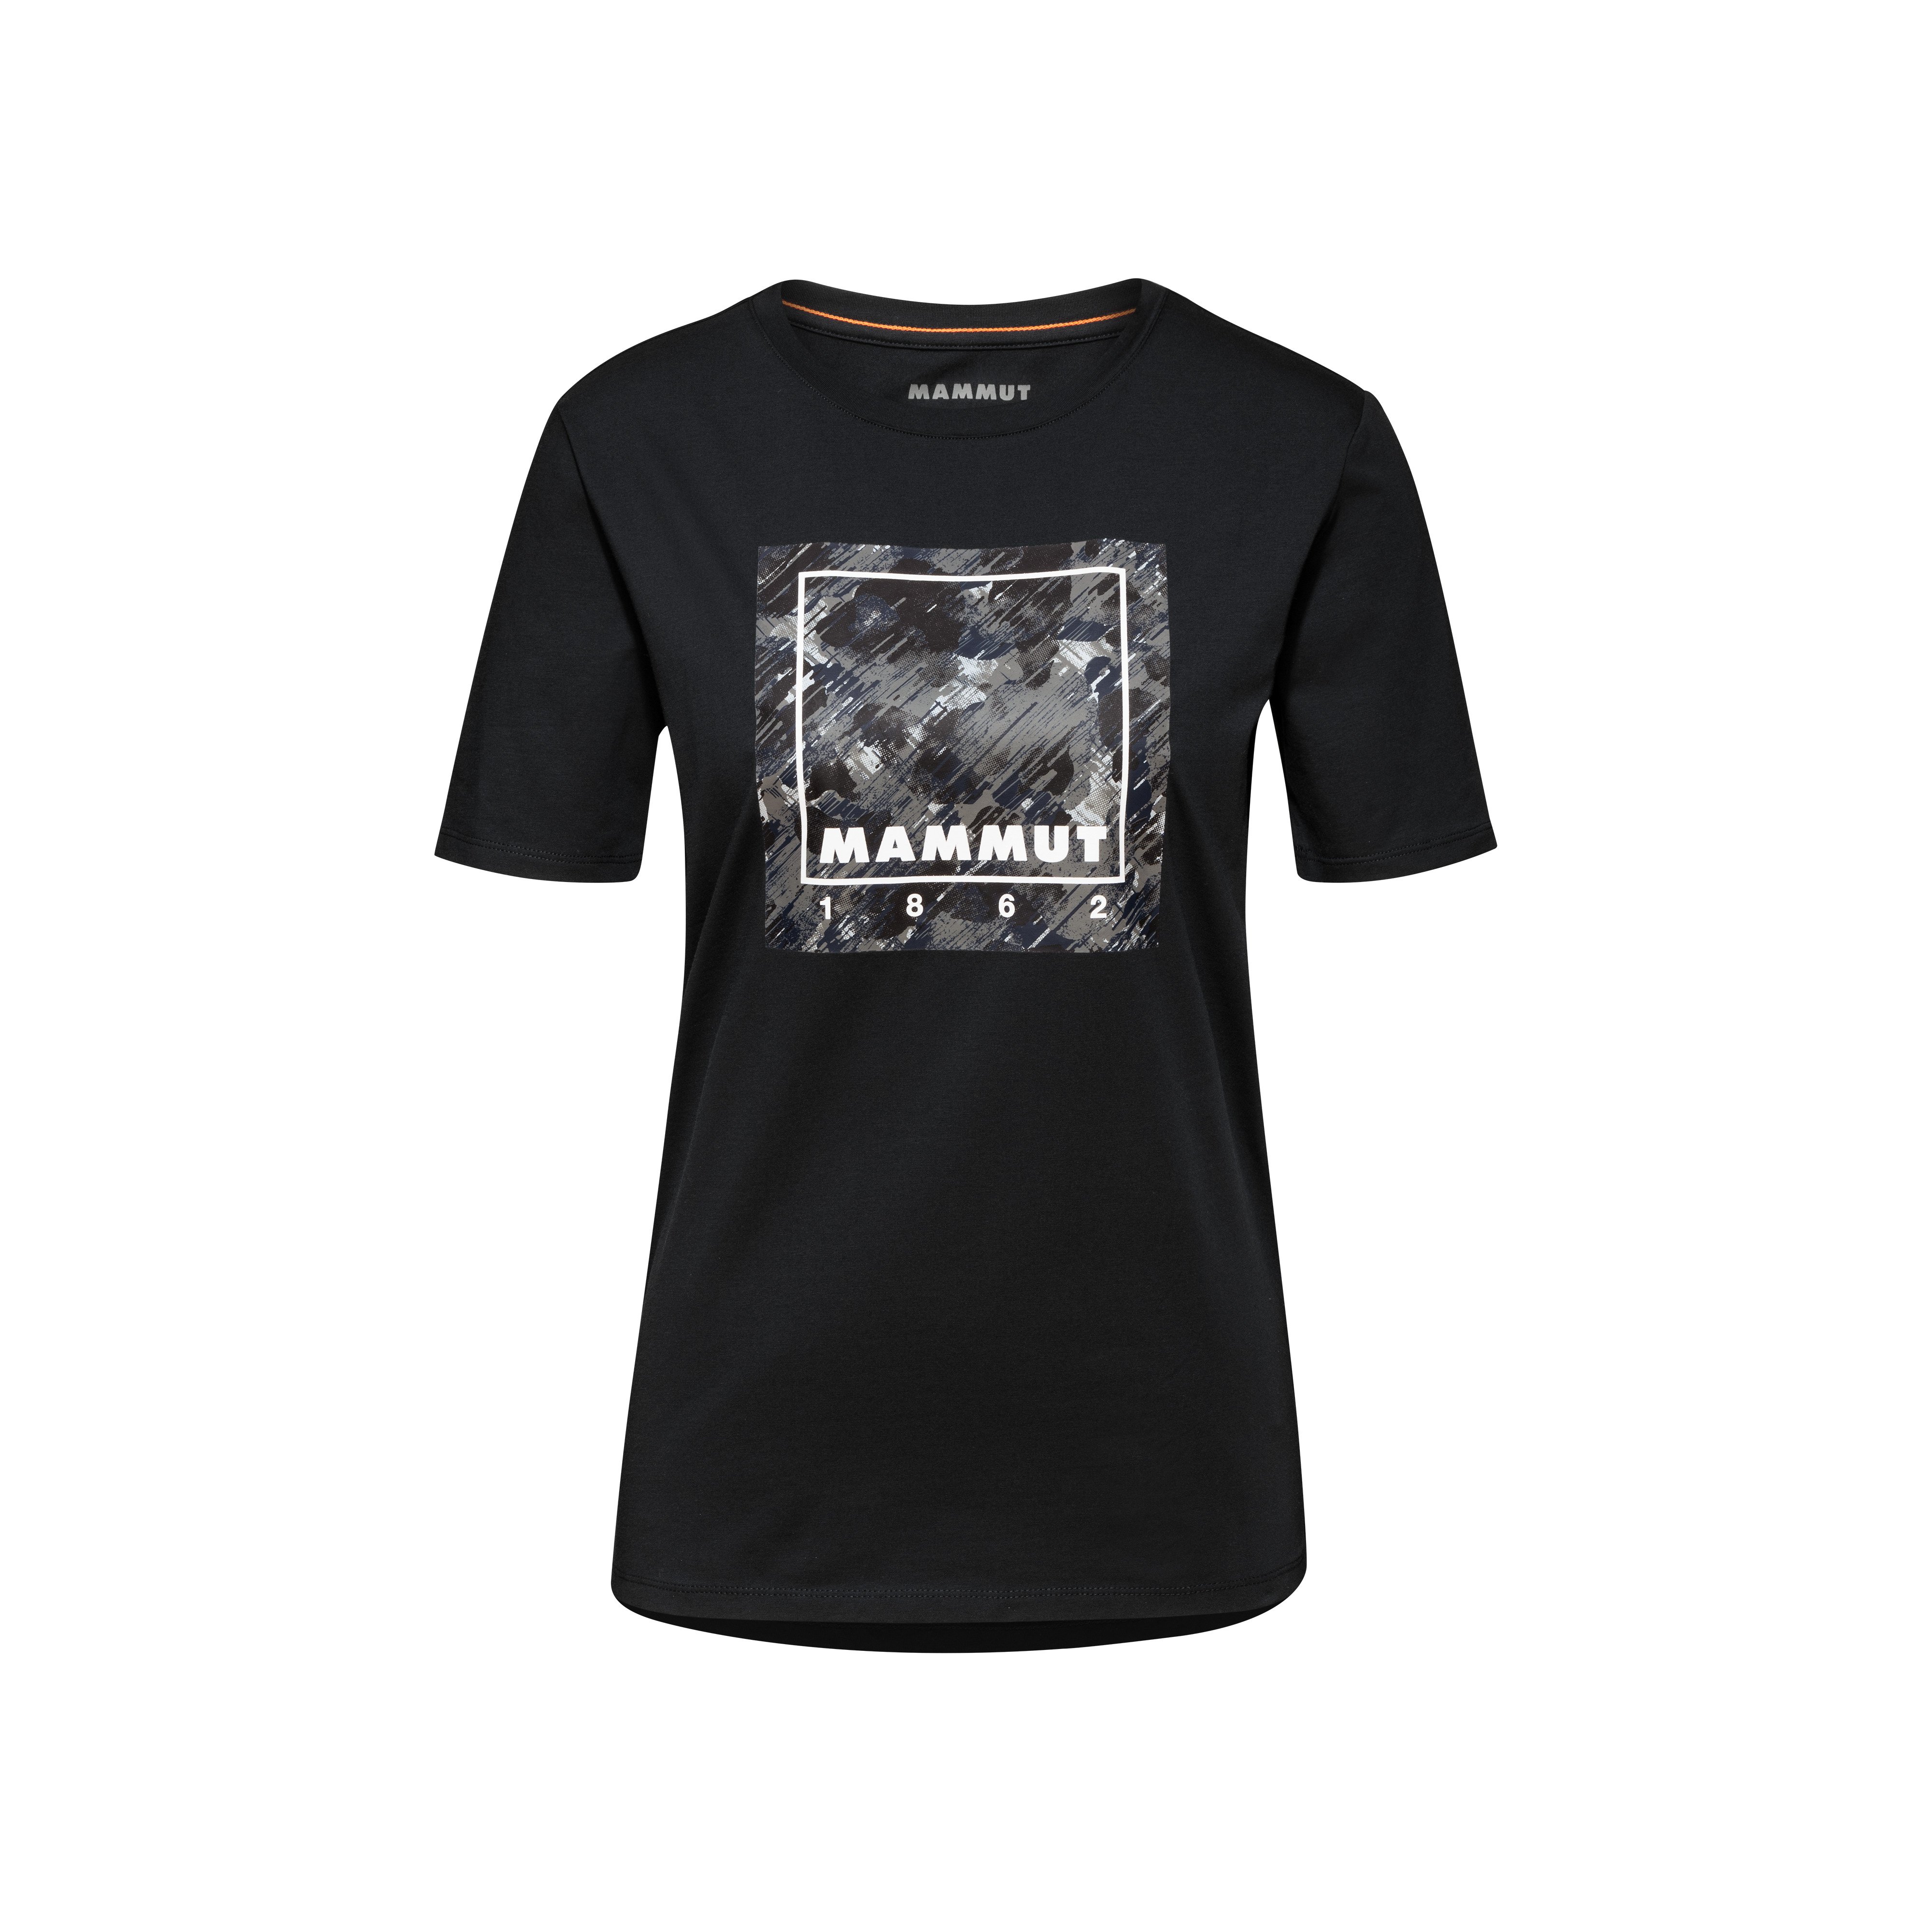 Mammut Graphic T-Shirt Women - black, XS thumbnail